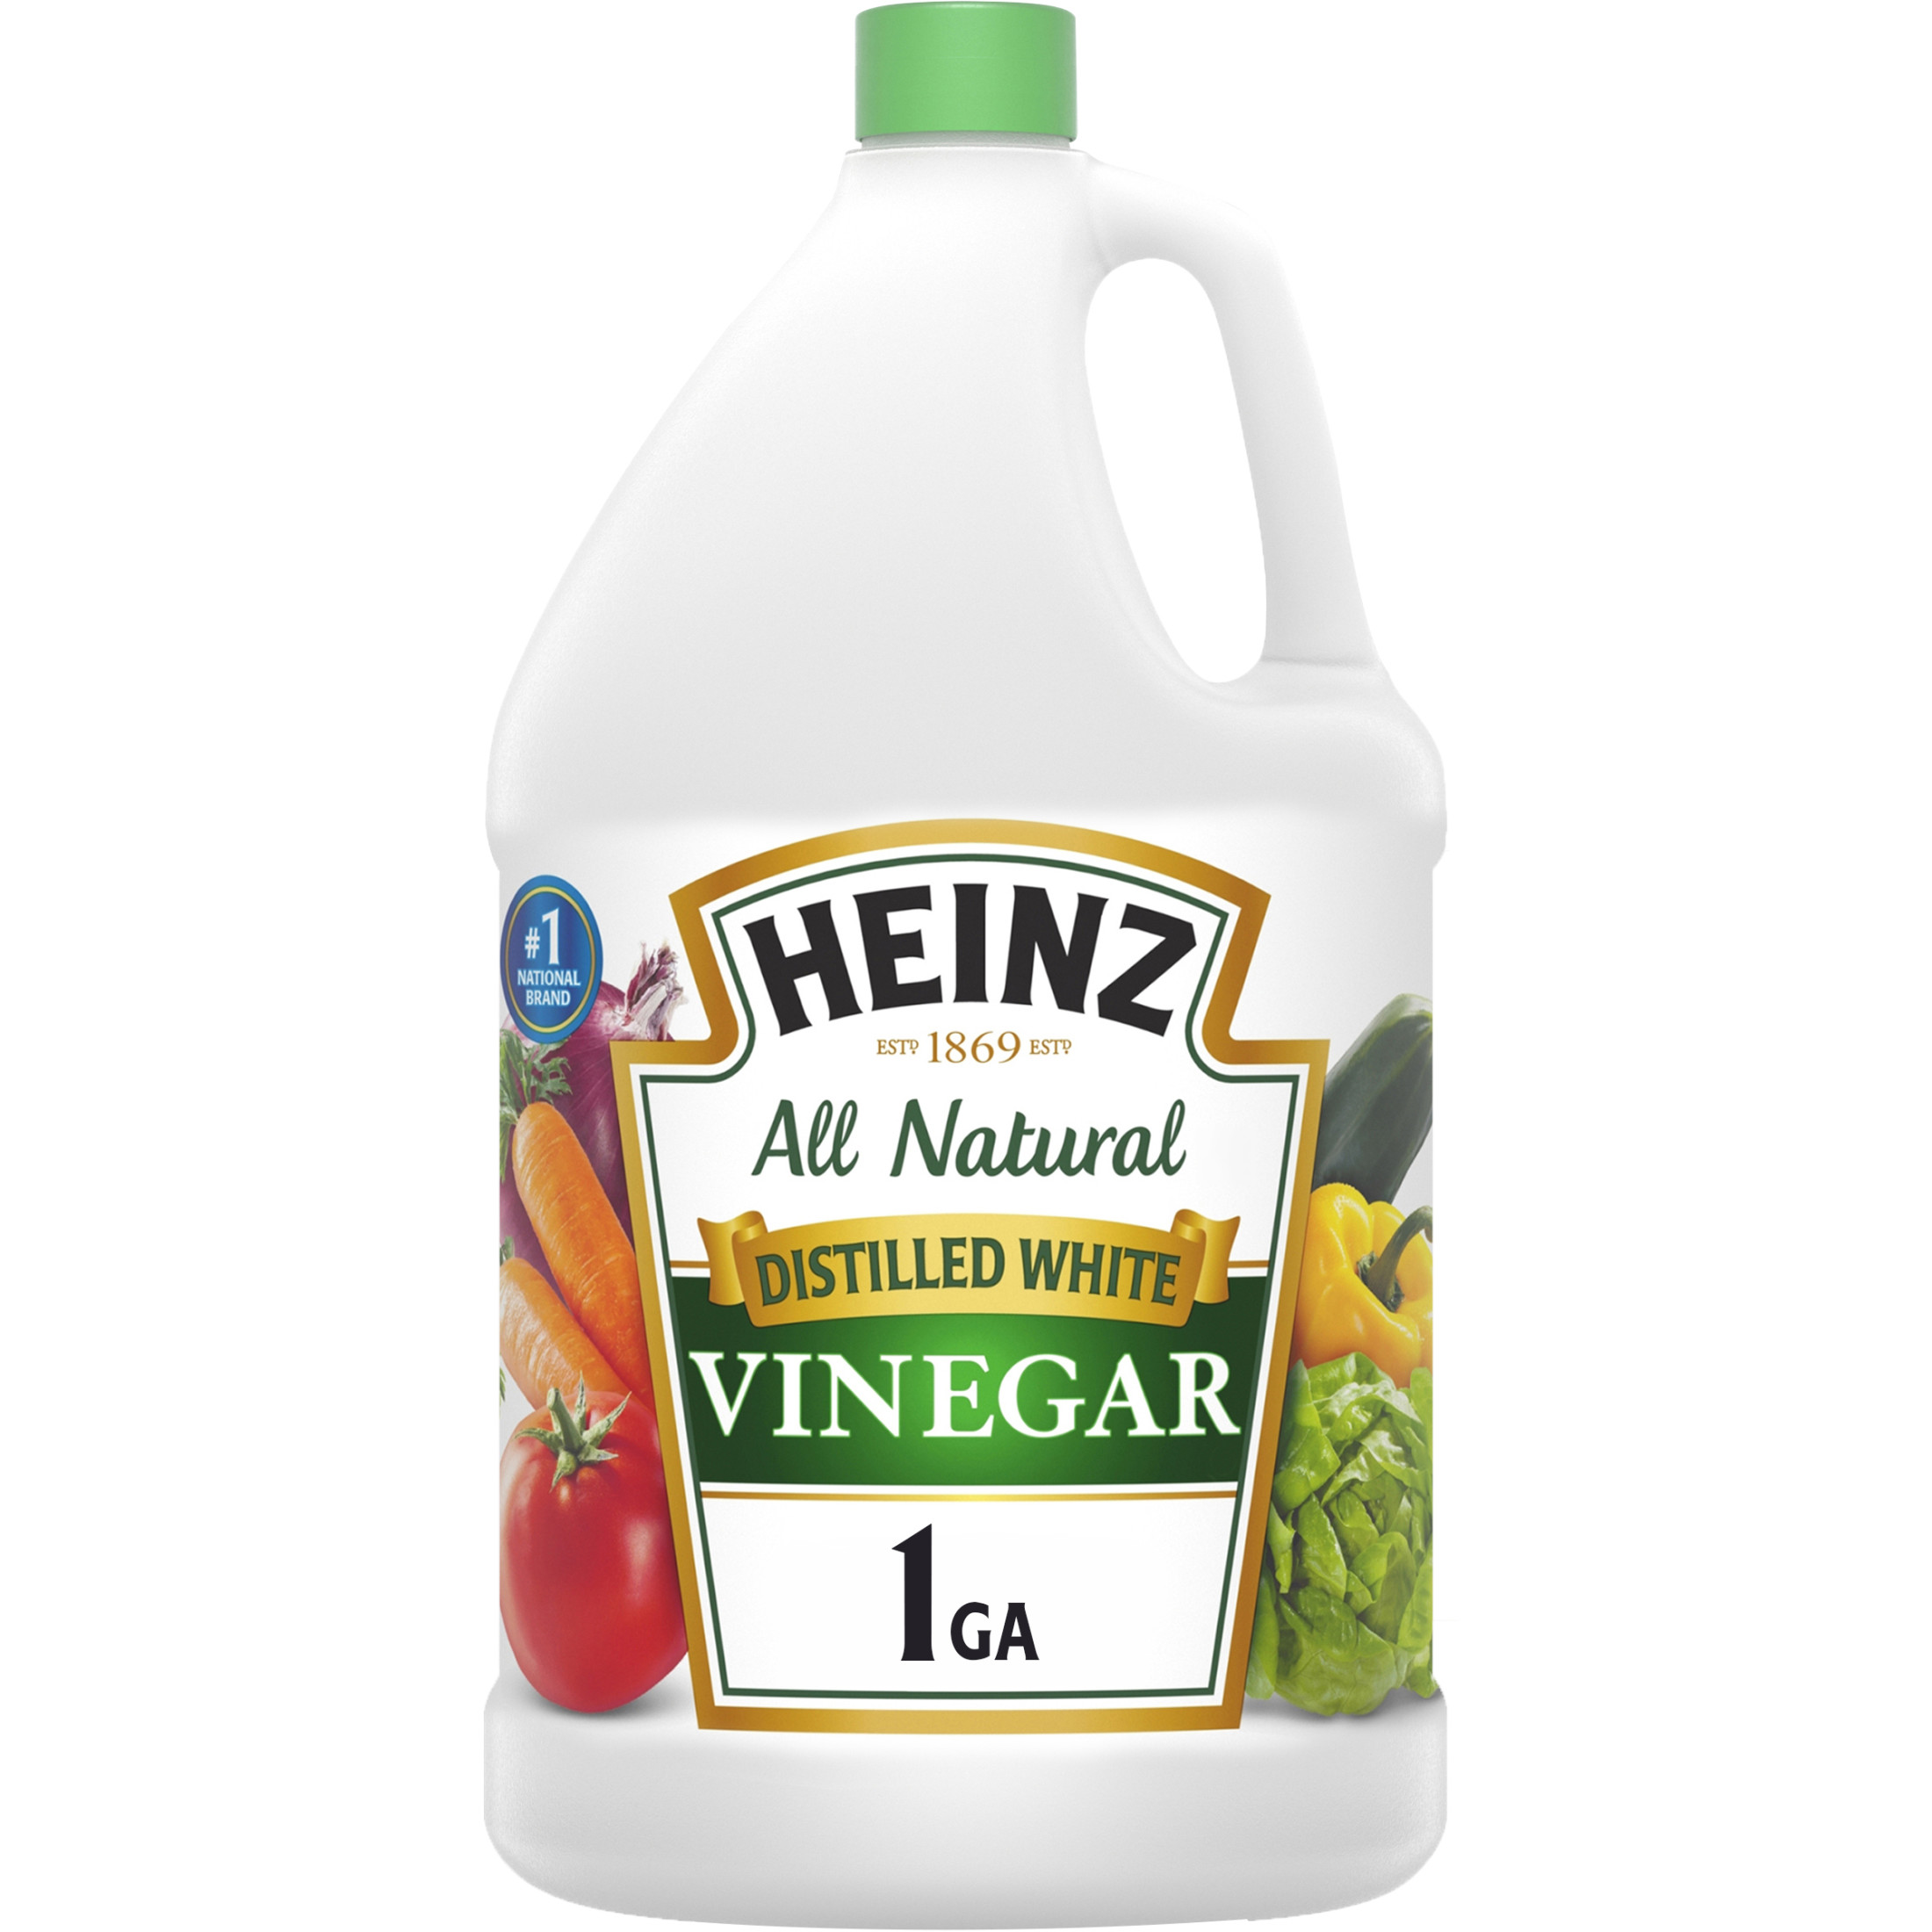 Heinz All Natural Distilled White Vinegar 5% Acidity, 1 gal Jug - image 1 of 6